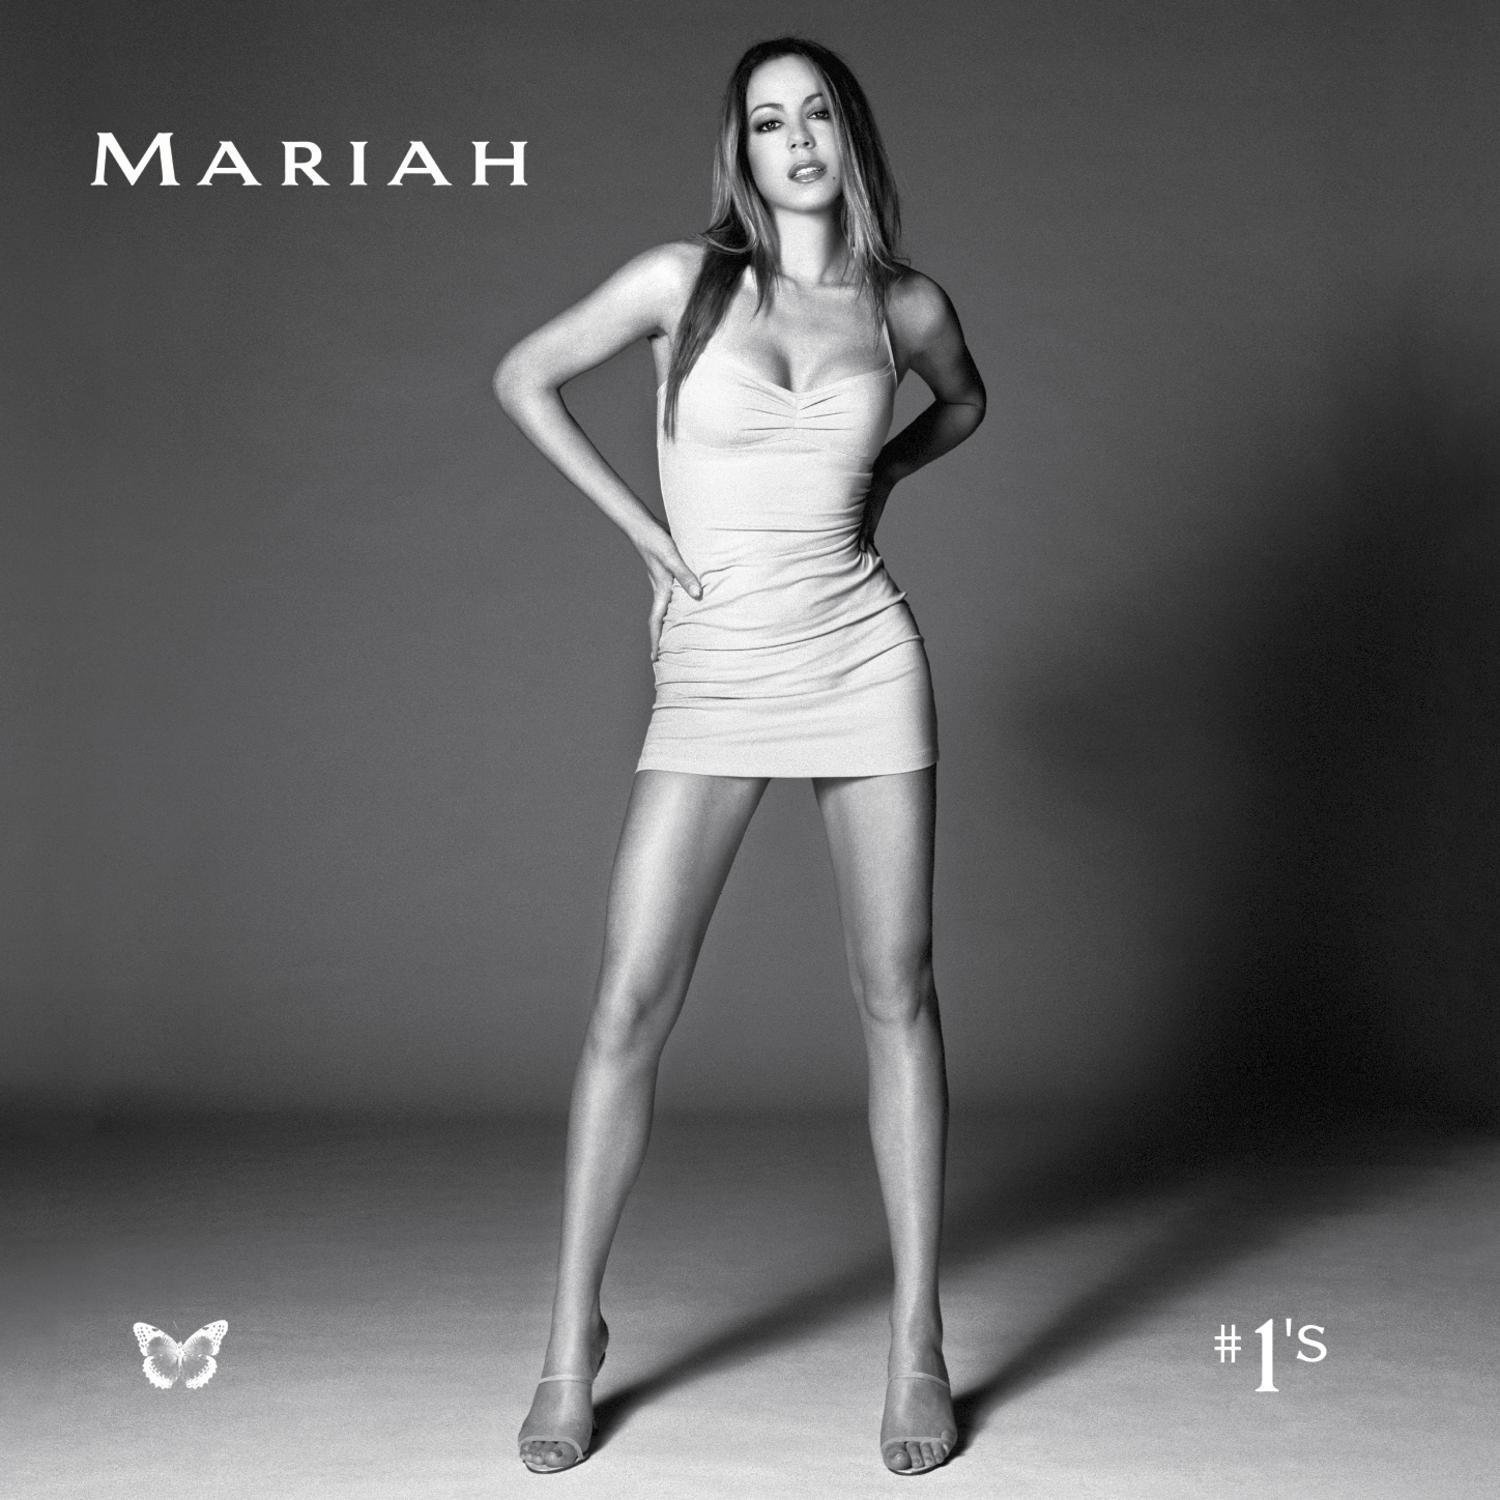 Mariah carey music downloads